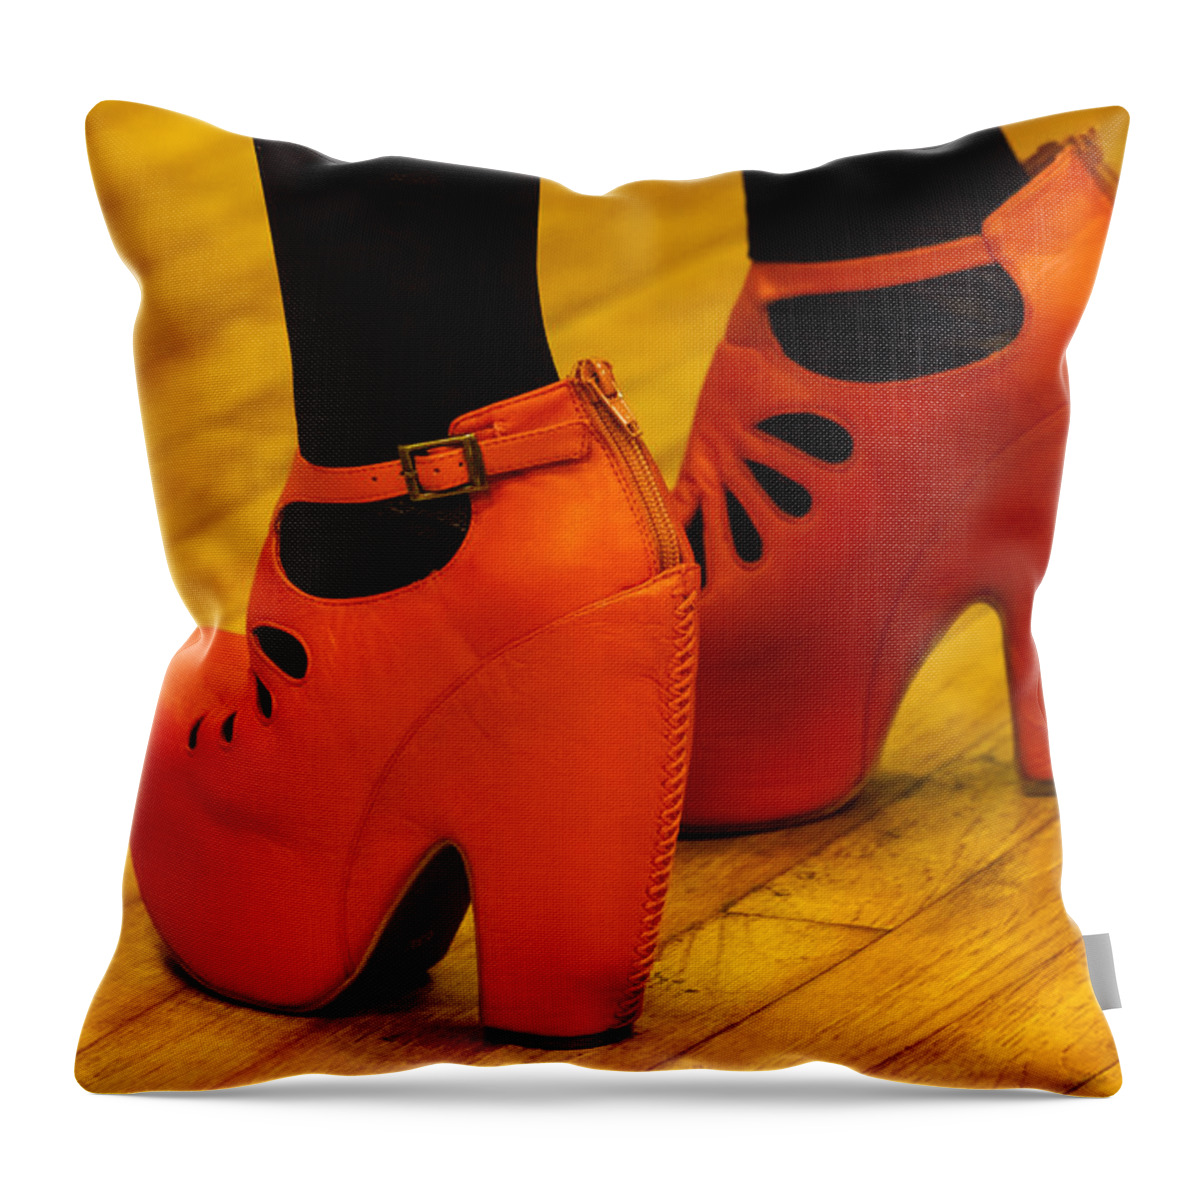 Black Throw Pillow featuring the photograph Orange Pair by Ed Gleichman